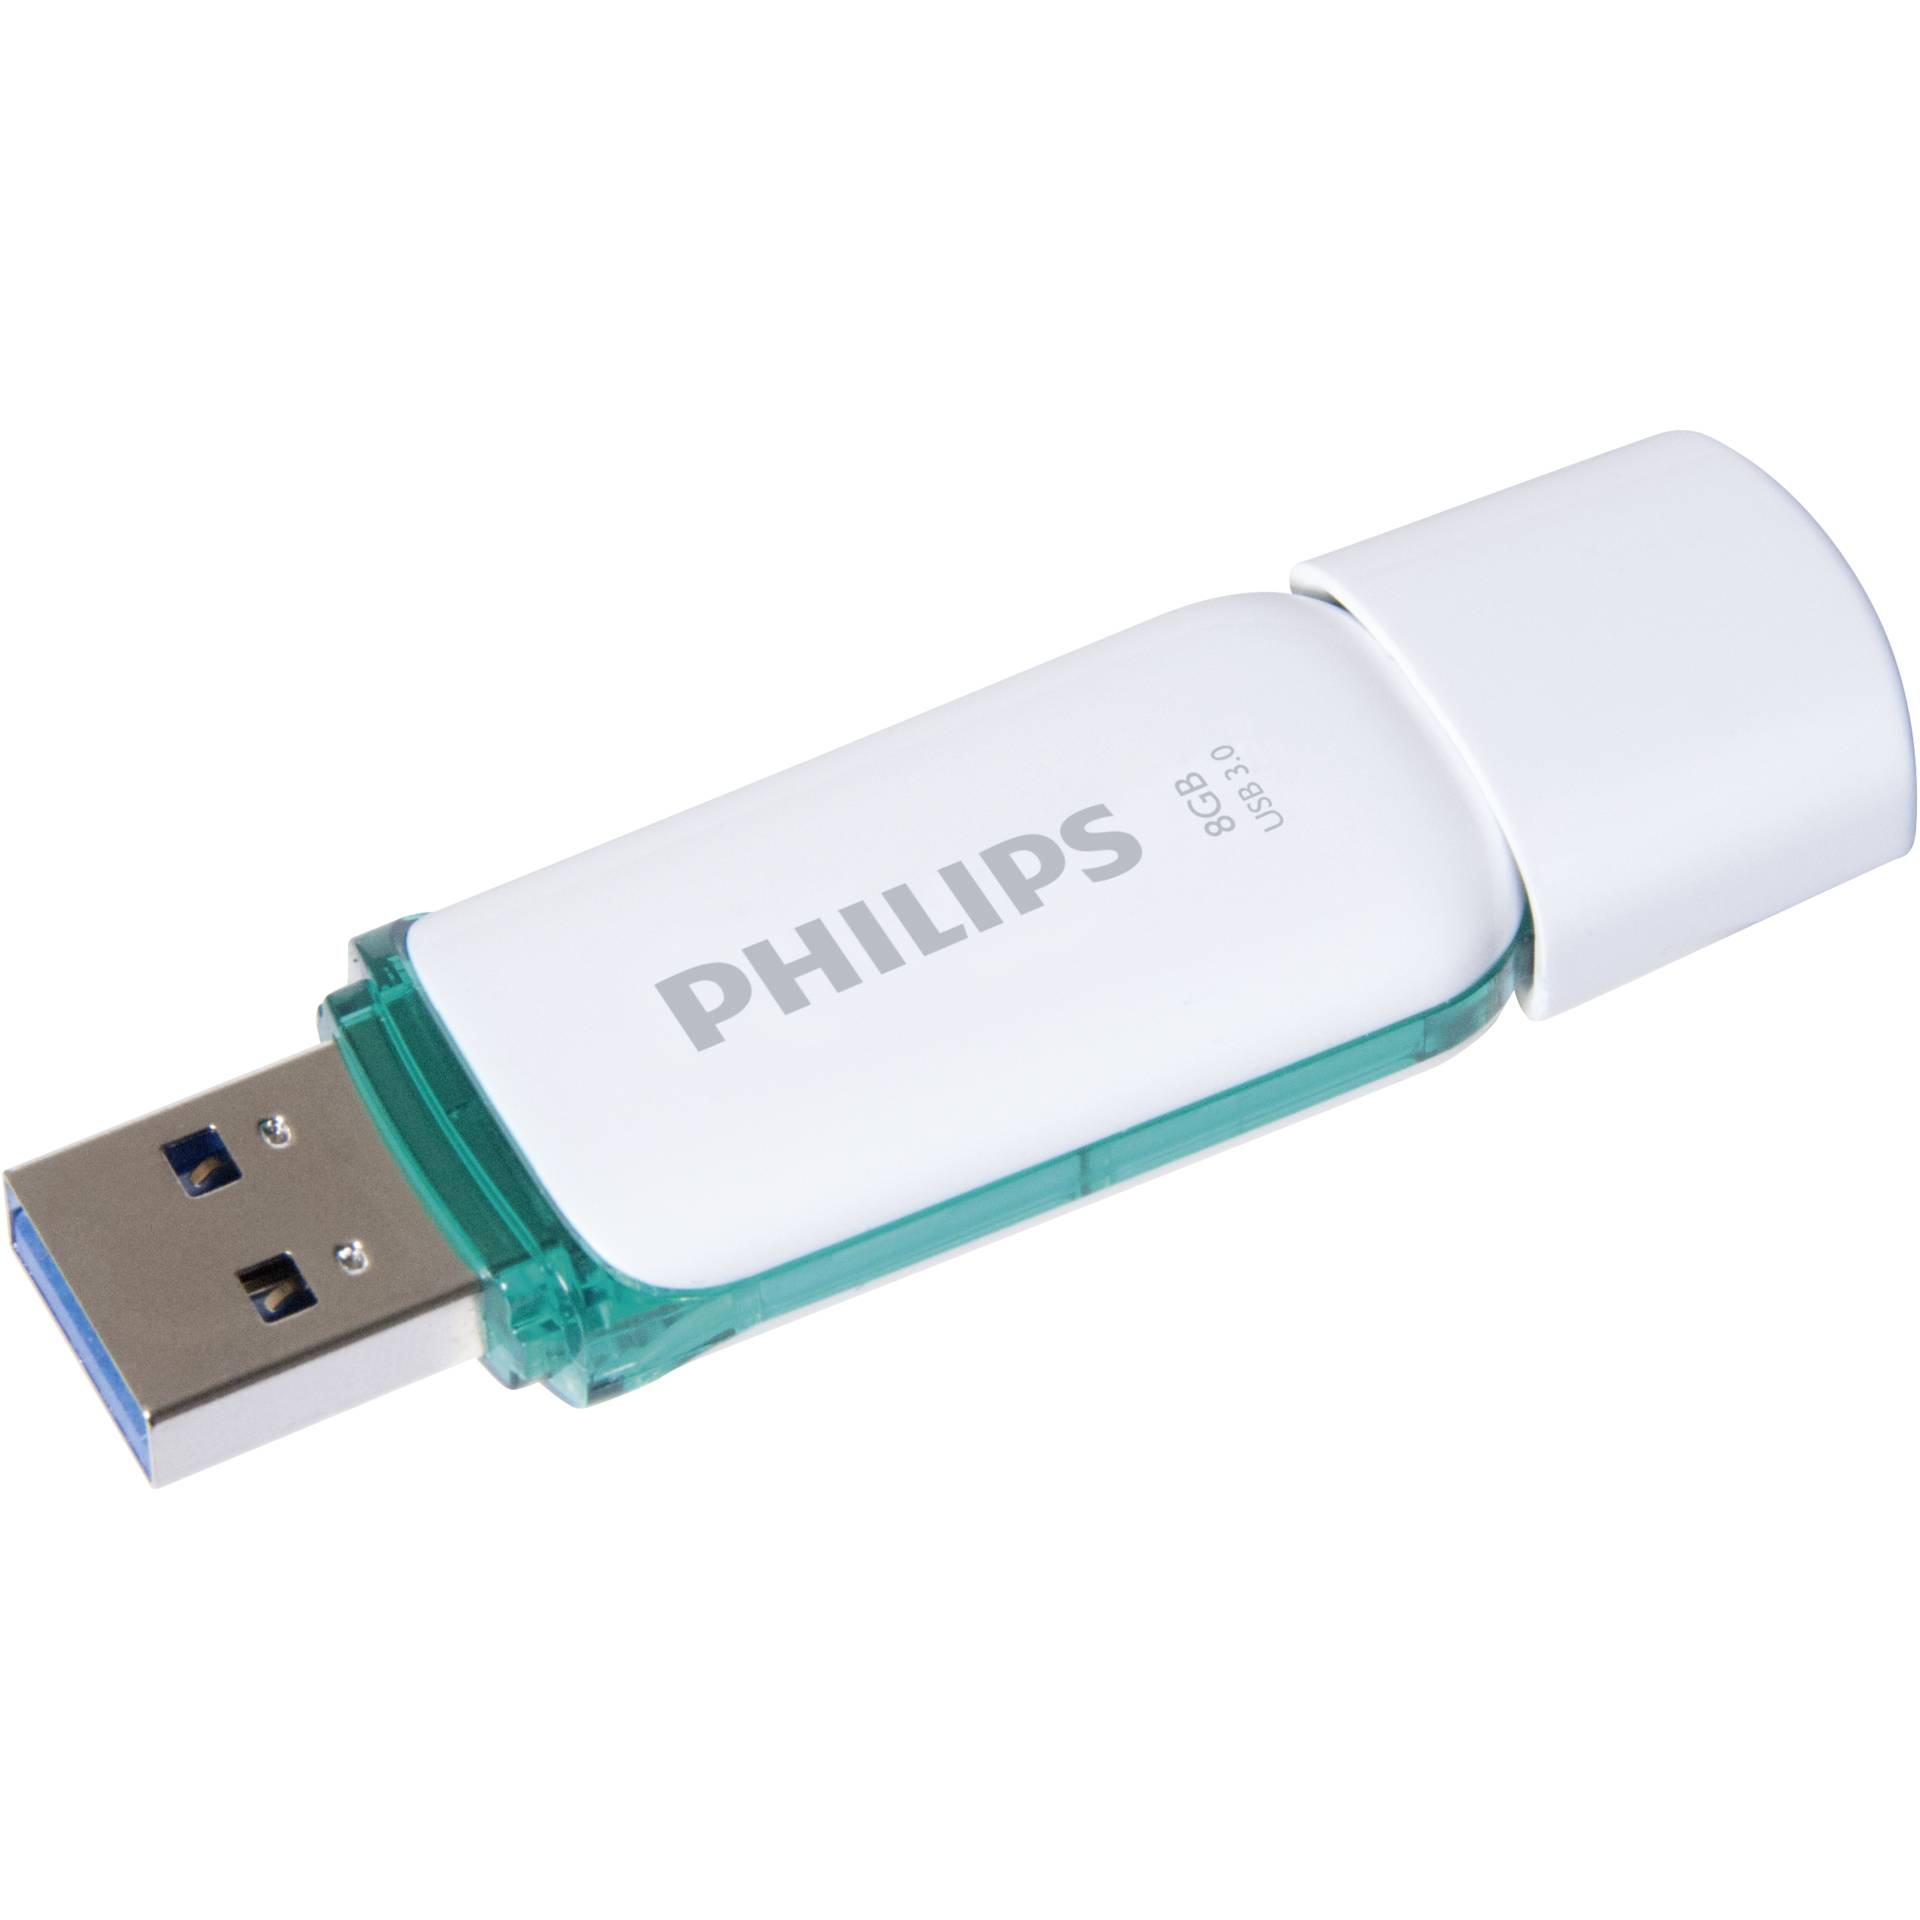 Philips USB 3.0              8GB Snow Edition verde